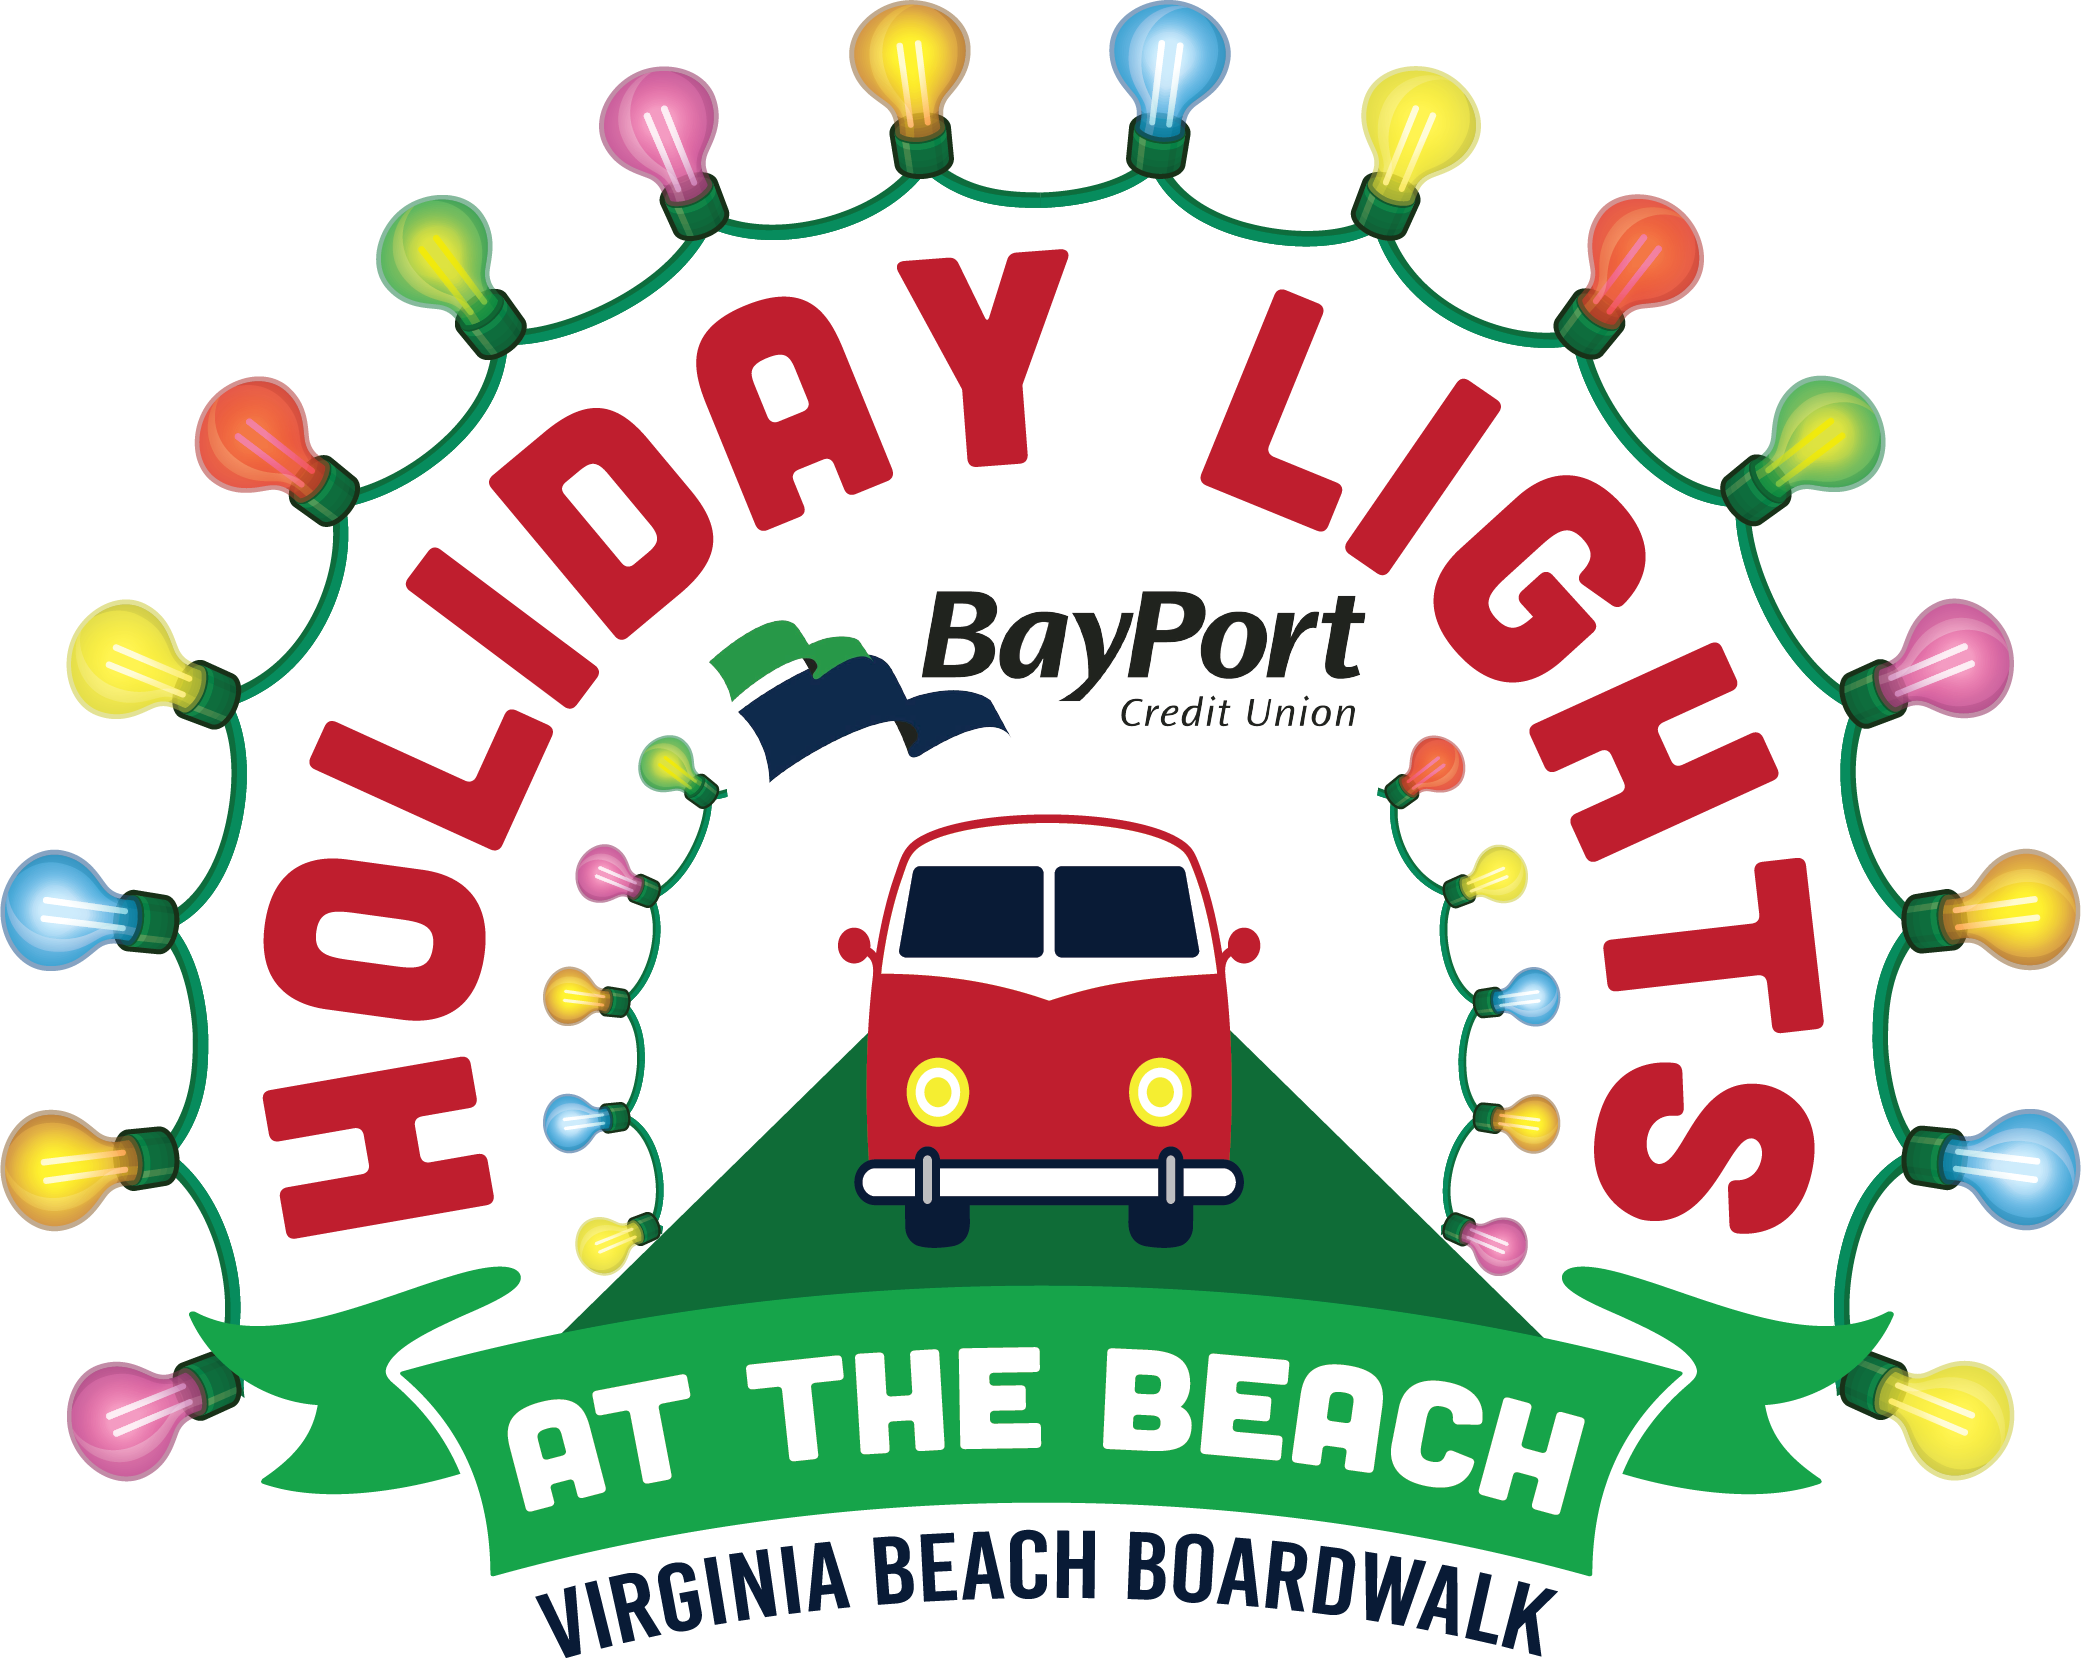 Holiday Lights logo